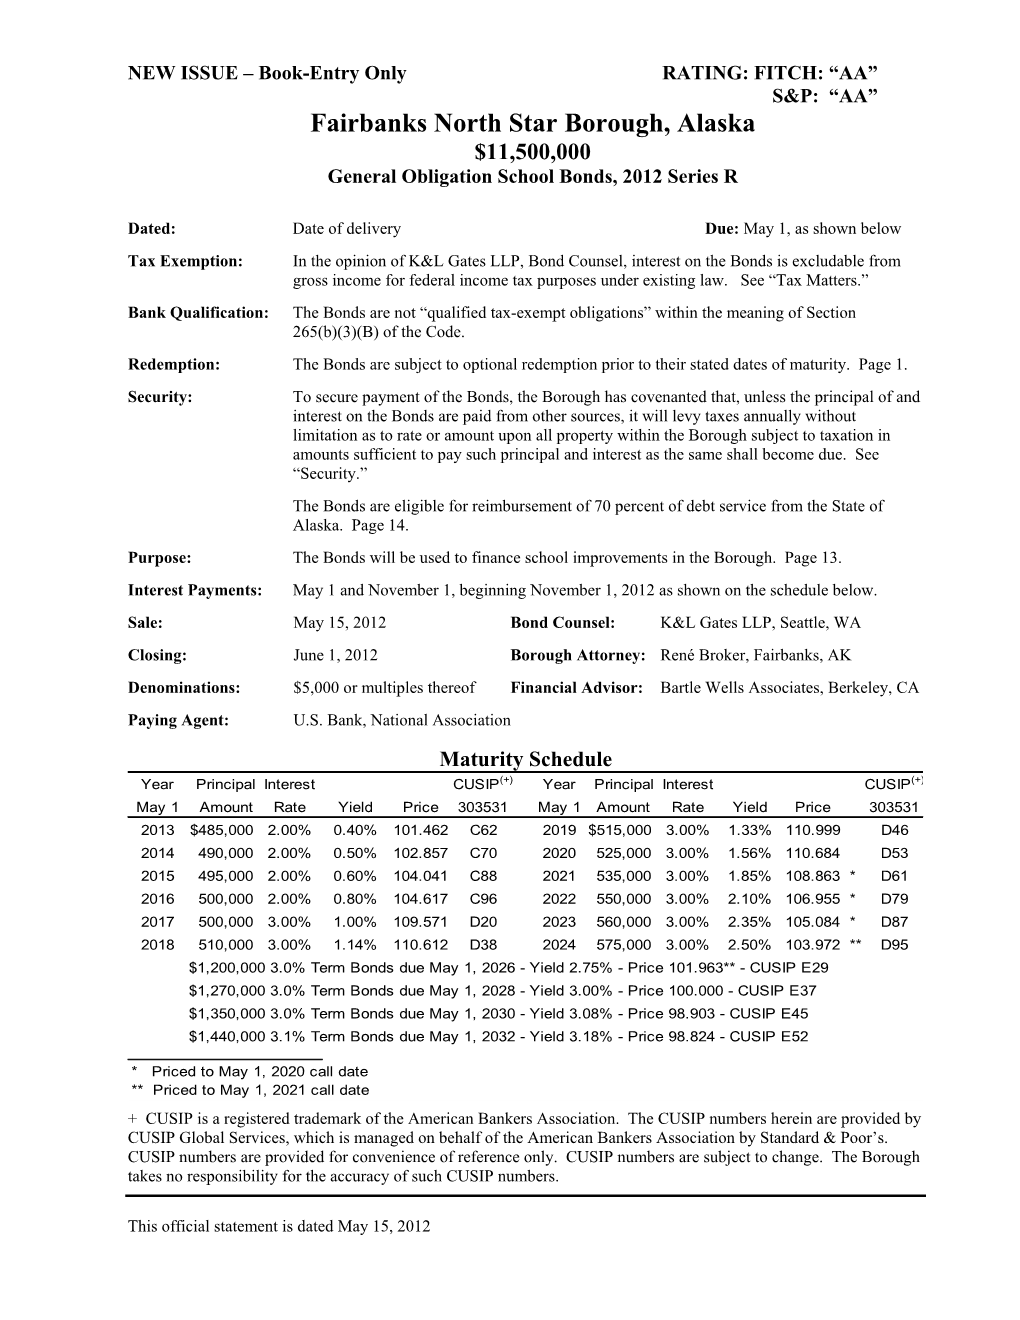 Fairbanks North Star Borough, Alaska $11,500,000 General Obligation School Bonds, 2012 Series R